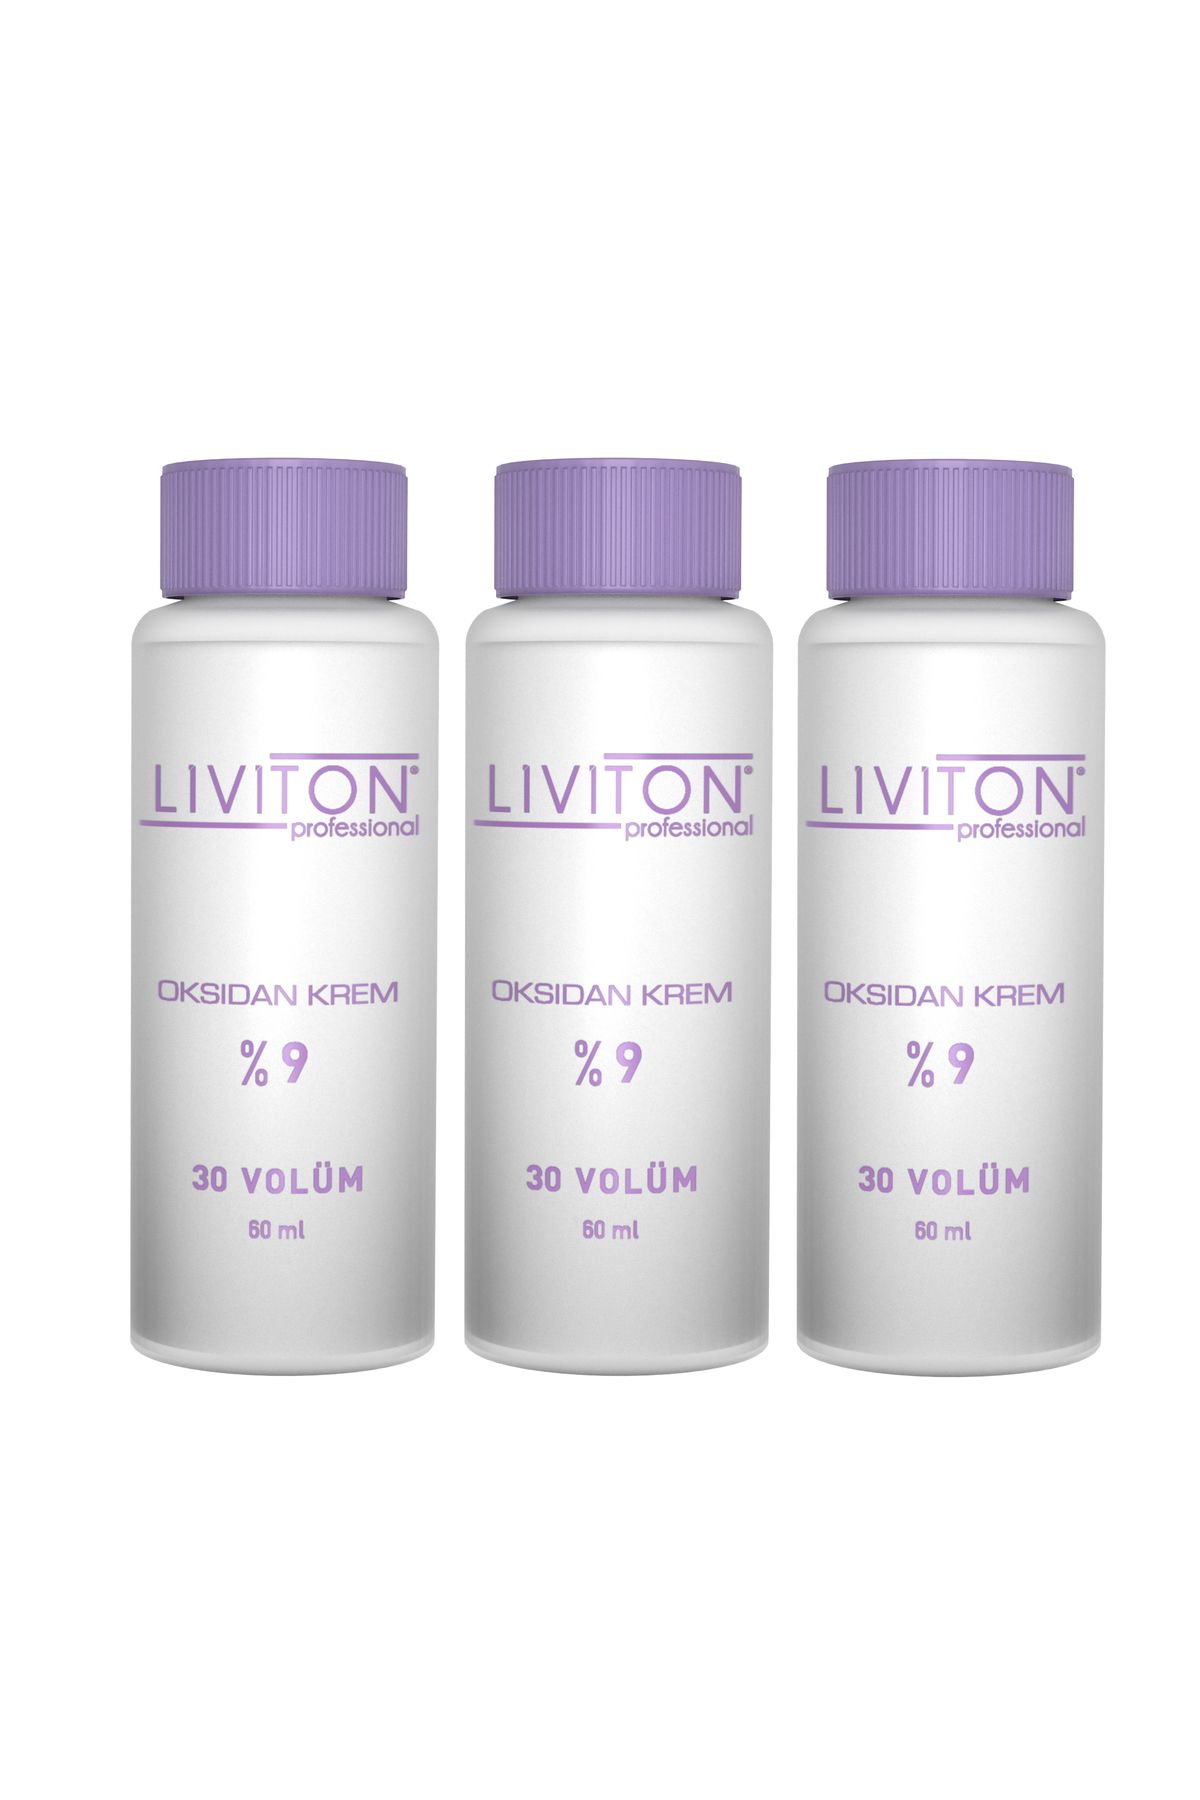 Liviton Professional Mini Oksidan Kremi 3 Adet %9 30 Volum